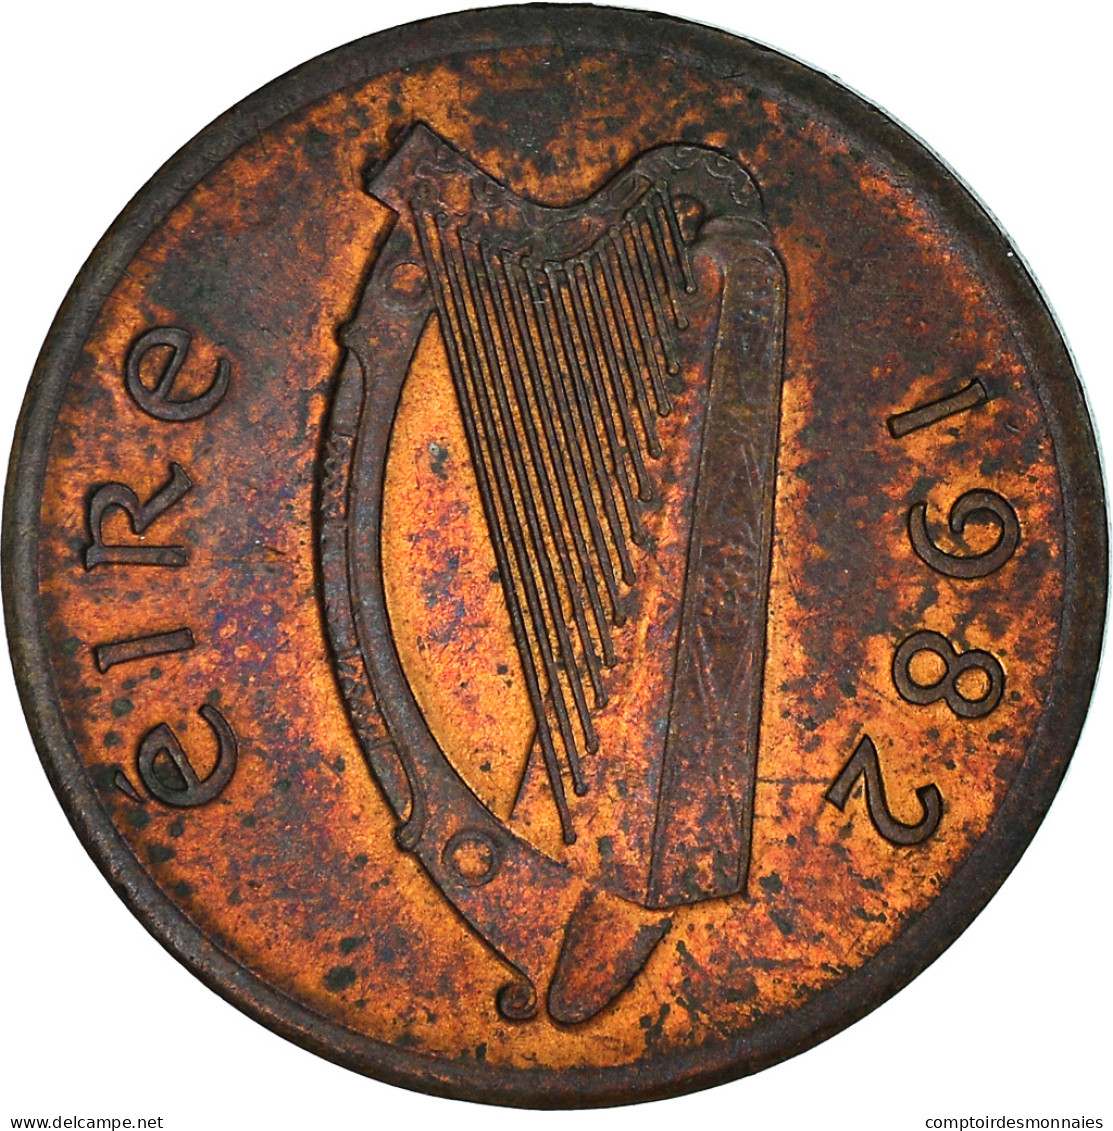 Monnaie, IRELAND REPUBLIC, 1/2 Penny, 1982, TB+, Bronze, KM:19 - Irland